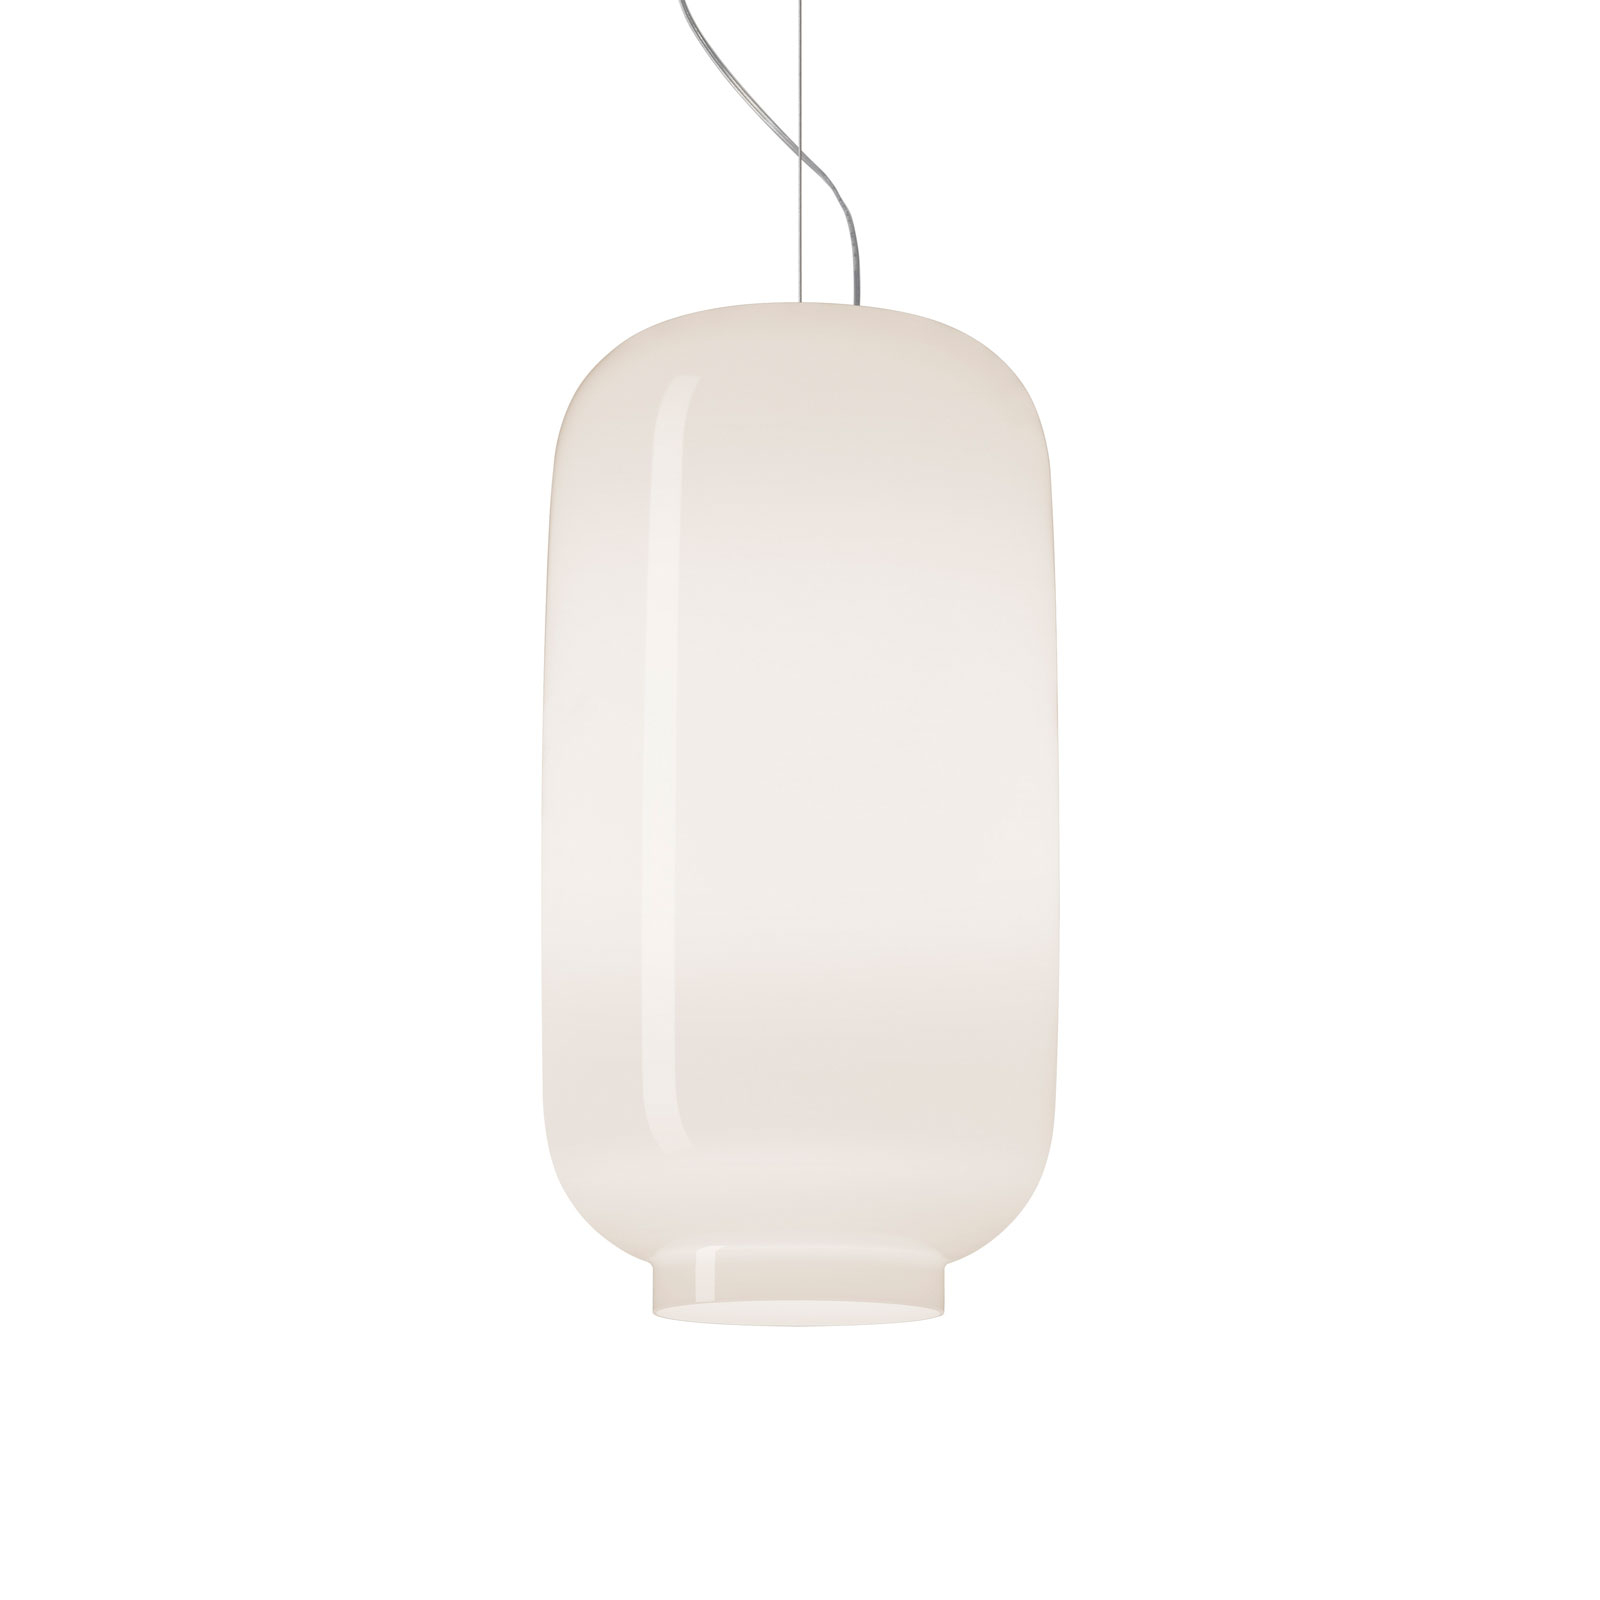 Foscarini Chouchin Bianco 2 LED-es függőlámpa, dimmelhető